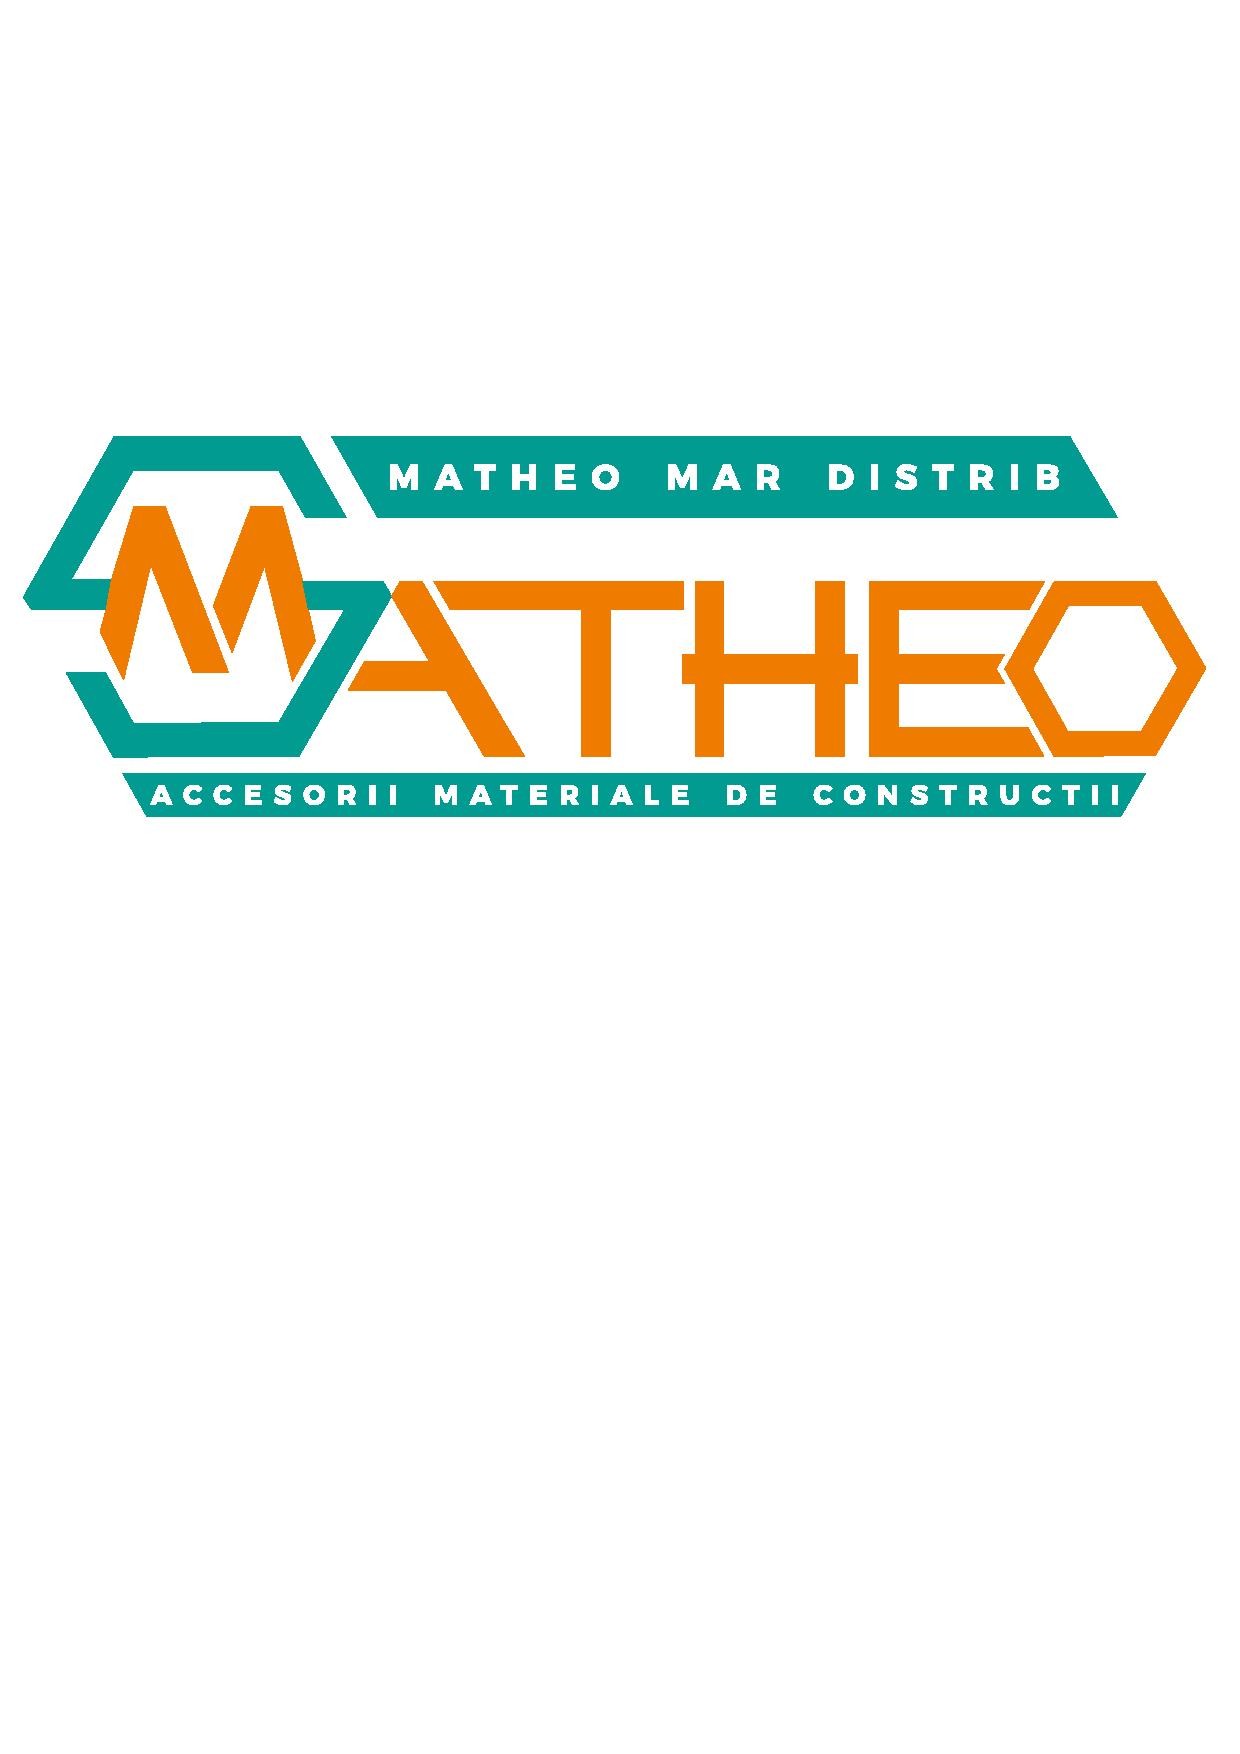 Matheo